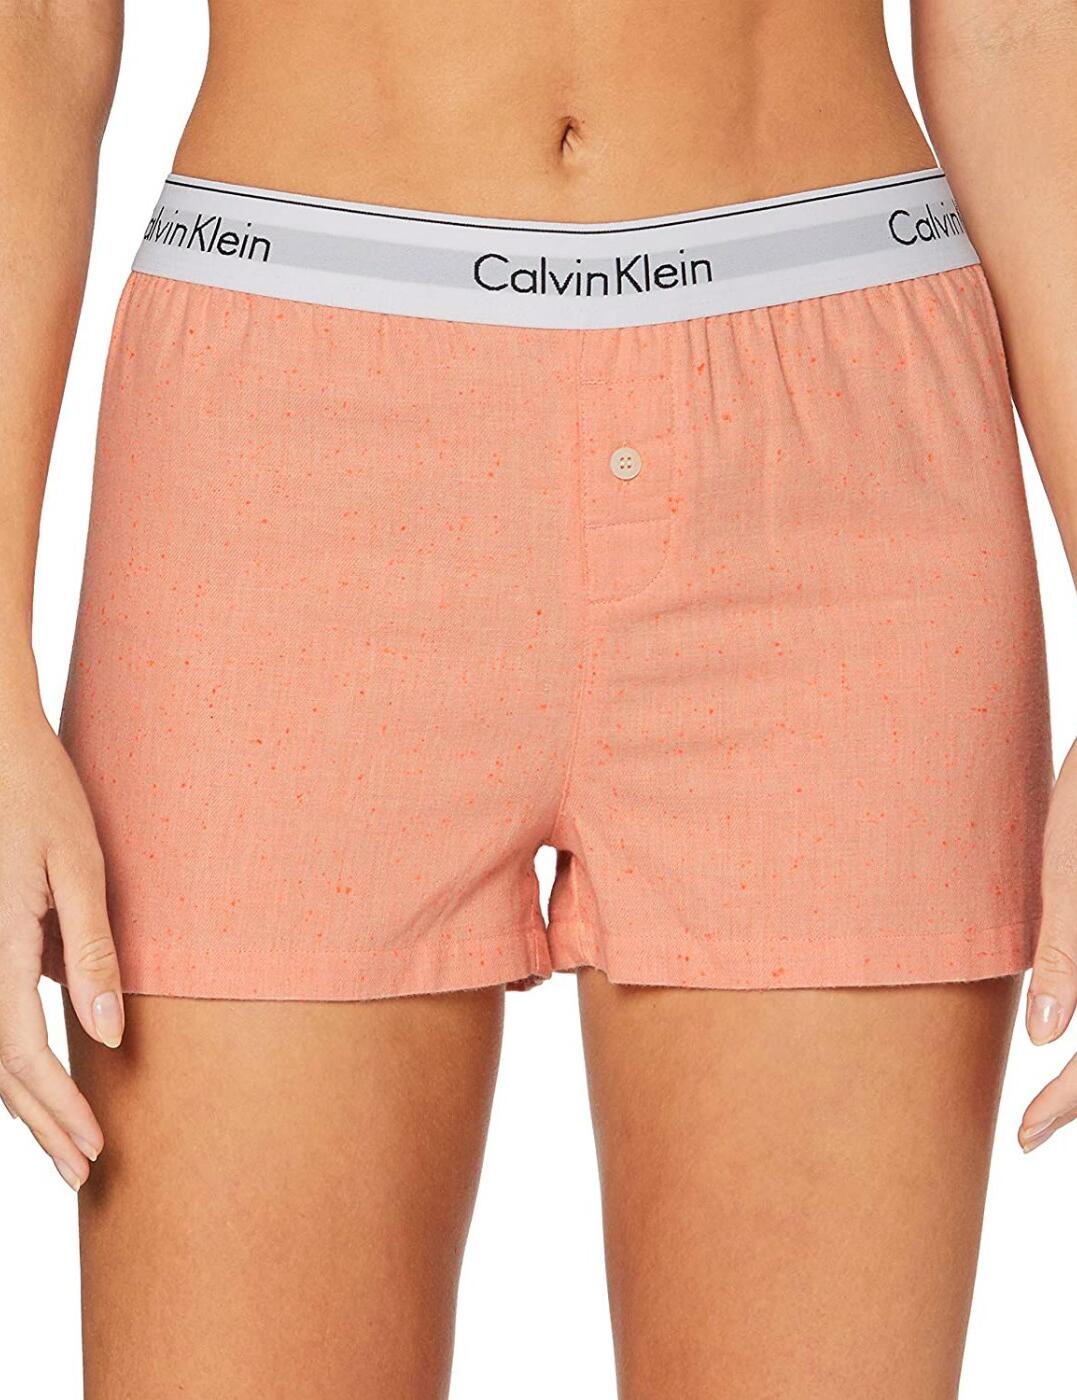 Calvin Klein Wovens Cotton Sleep Shorts - Belle Lingerie